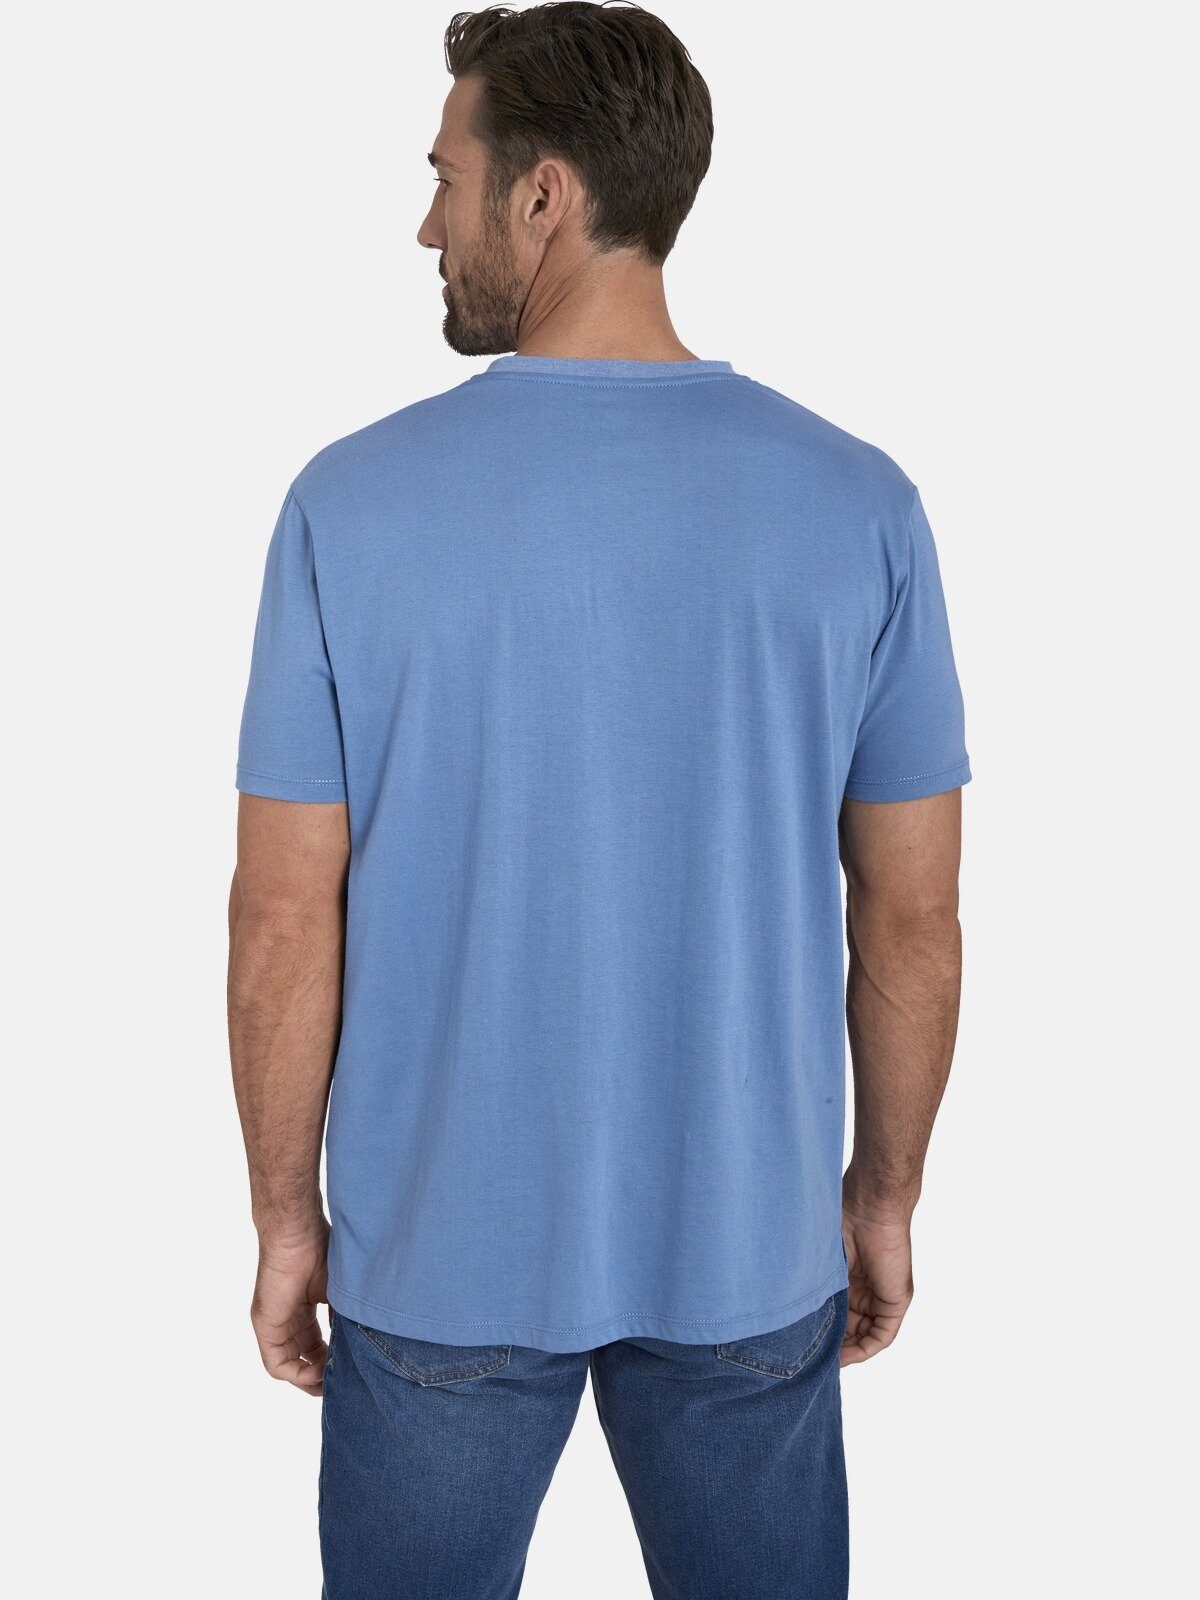 Baumwollshirt REIDAR blau mit Vanderstorm T-Shirt Jan Knopfleiste